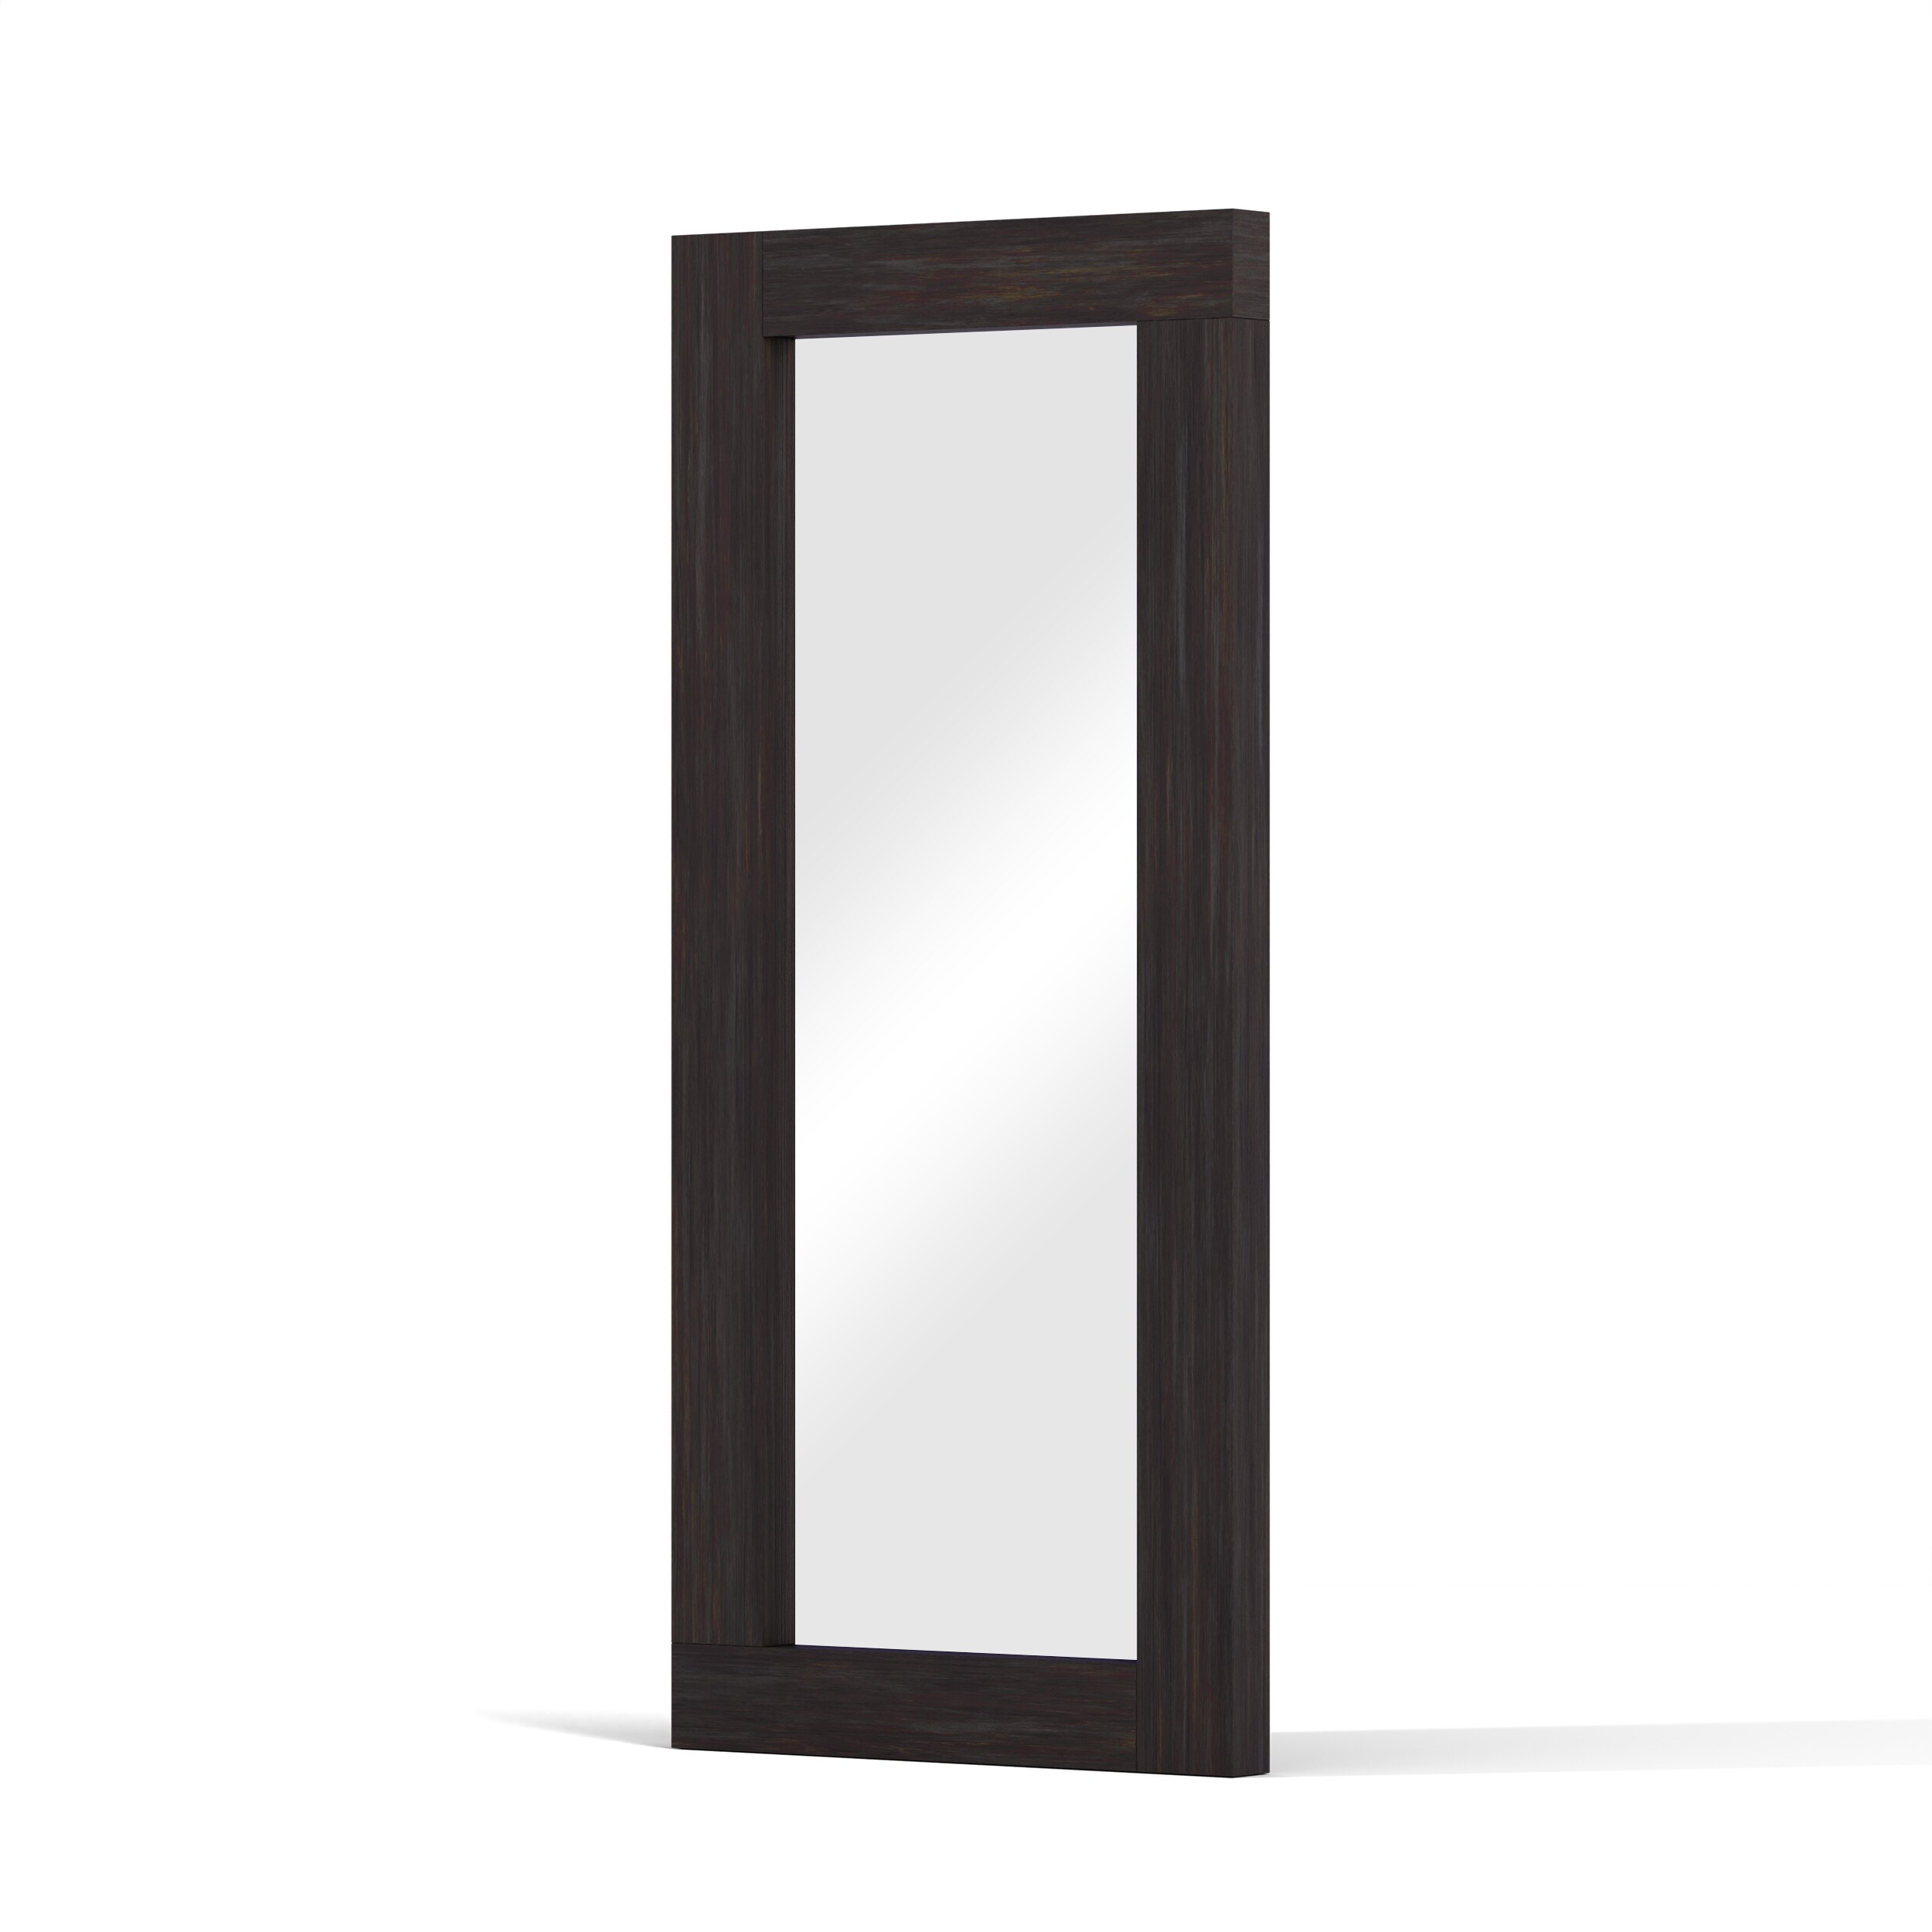 NeuType 24-in W x 57.9-in H Brown Framed Full Length Floor Mirror 